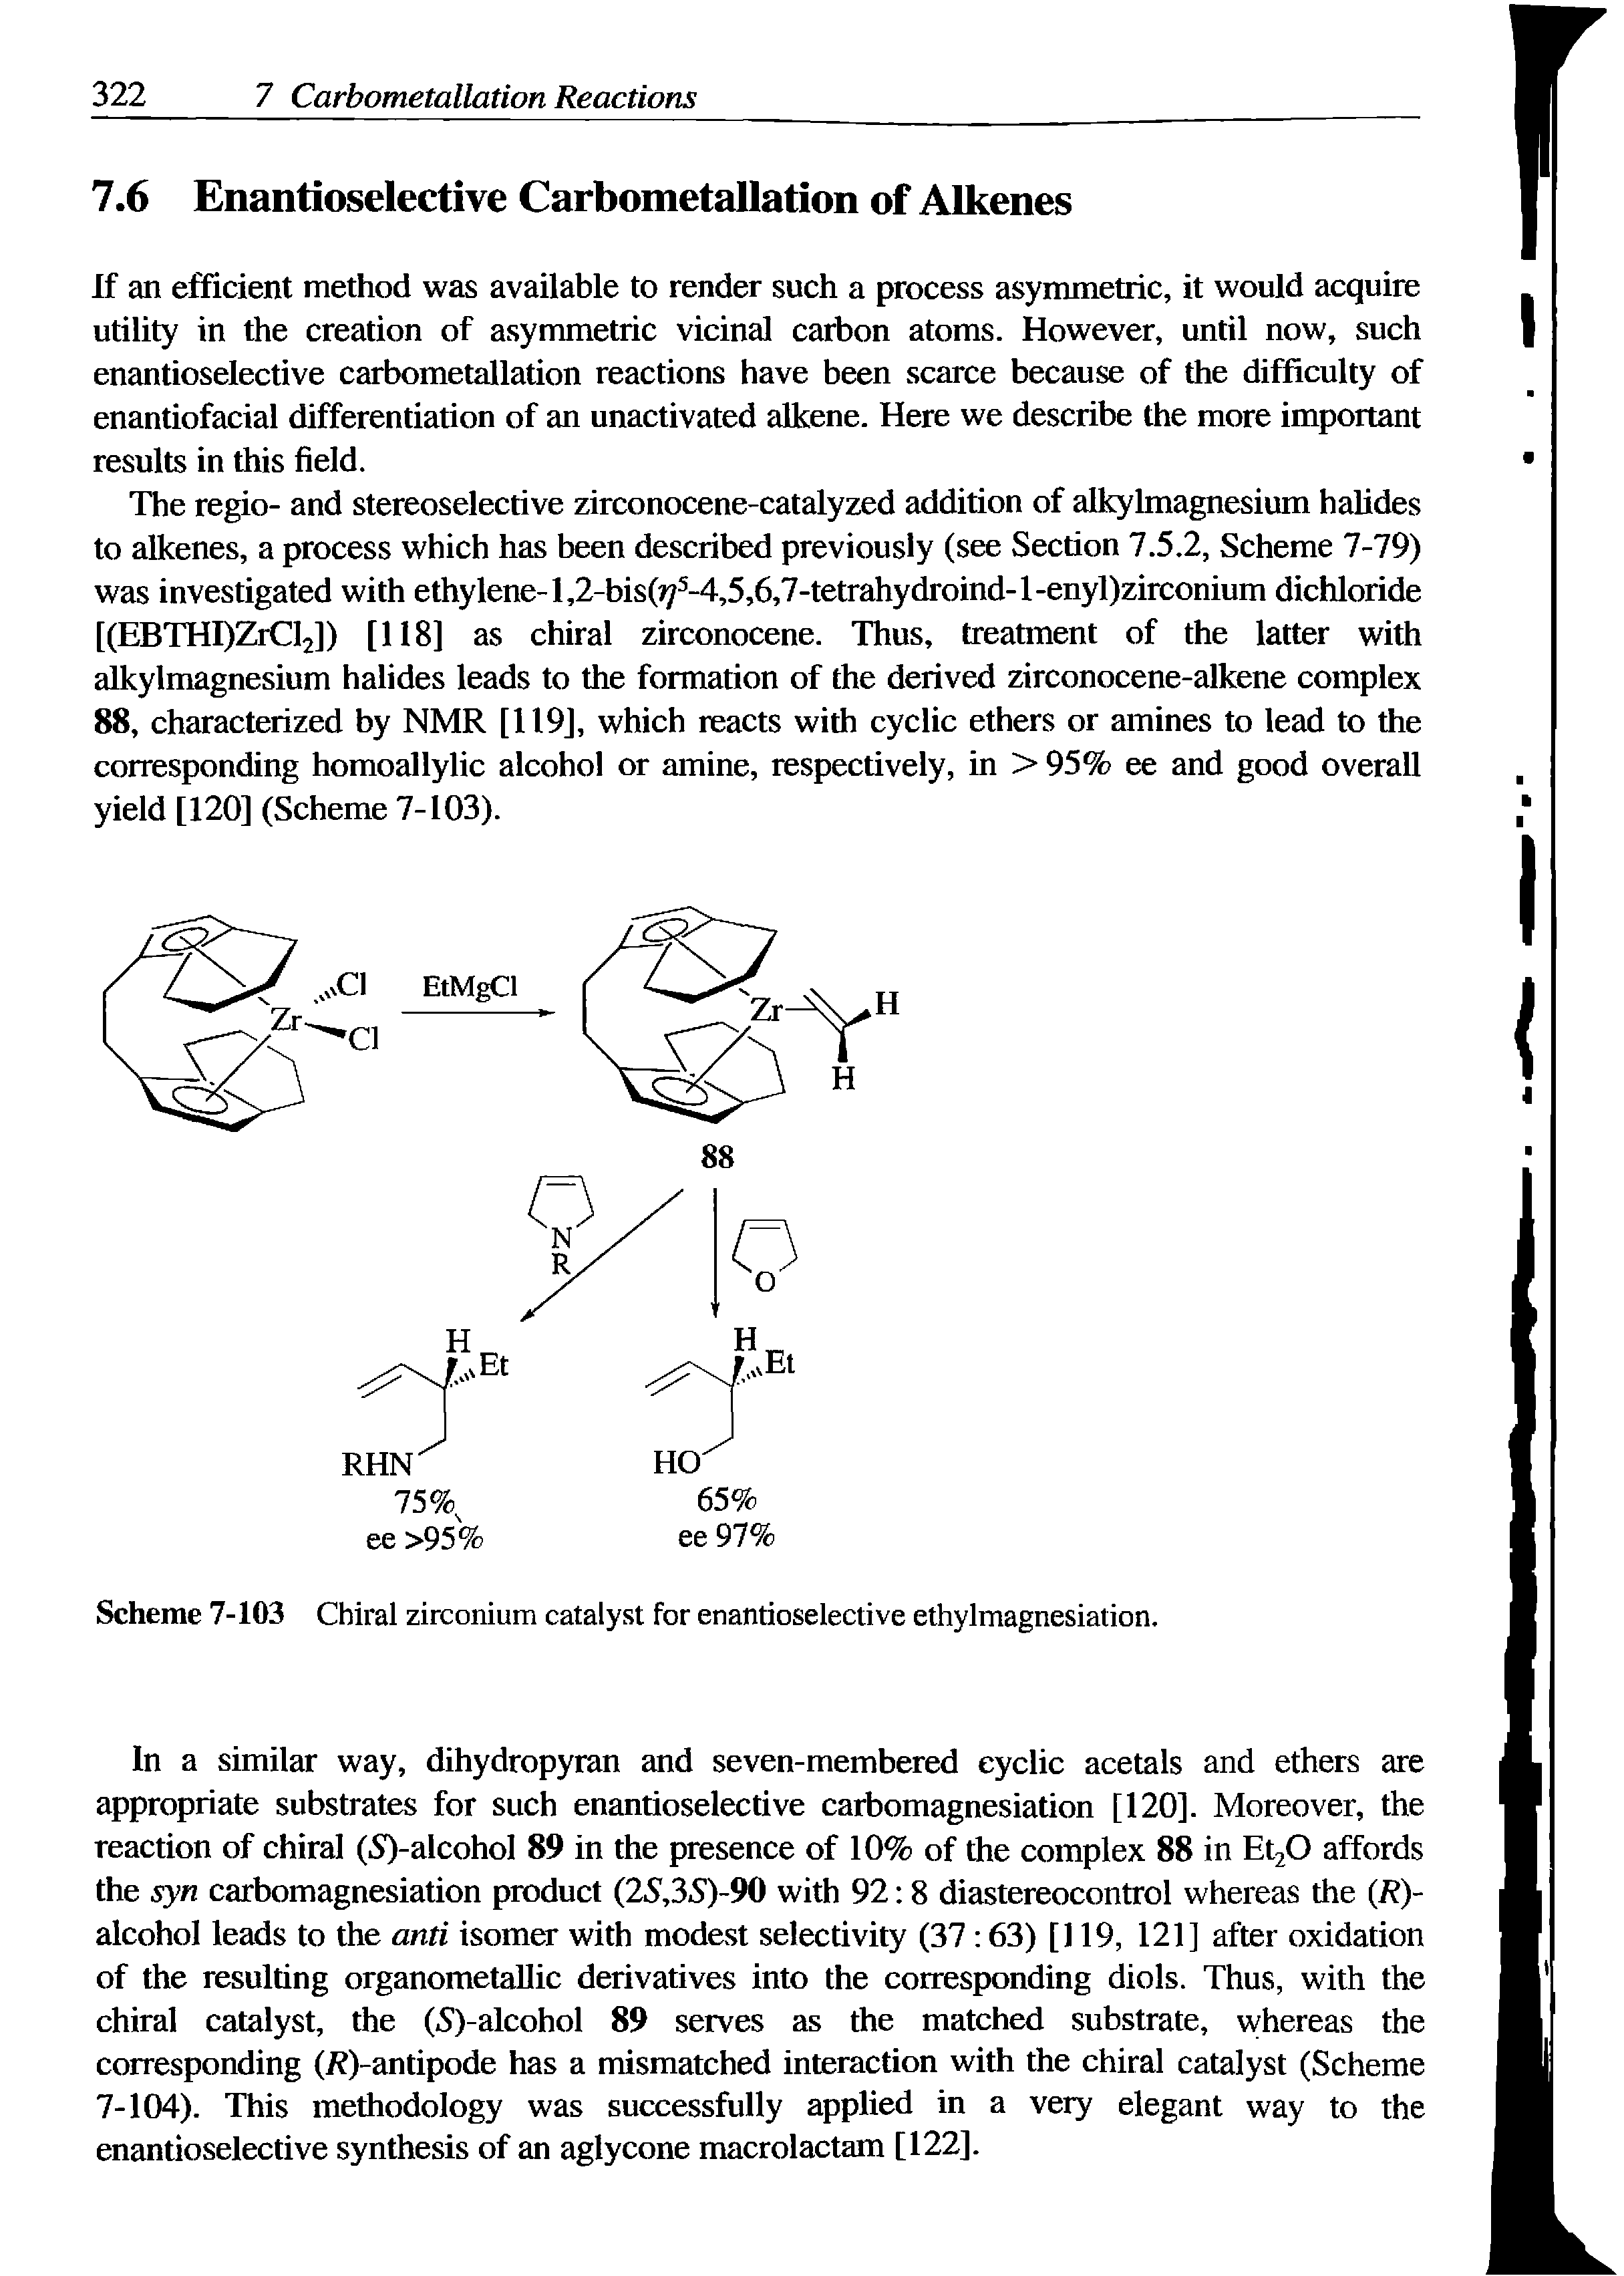 Scheme 7-103 Chiral zirconium catalyst for enantioselective ethylmagnesiation.